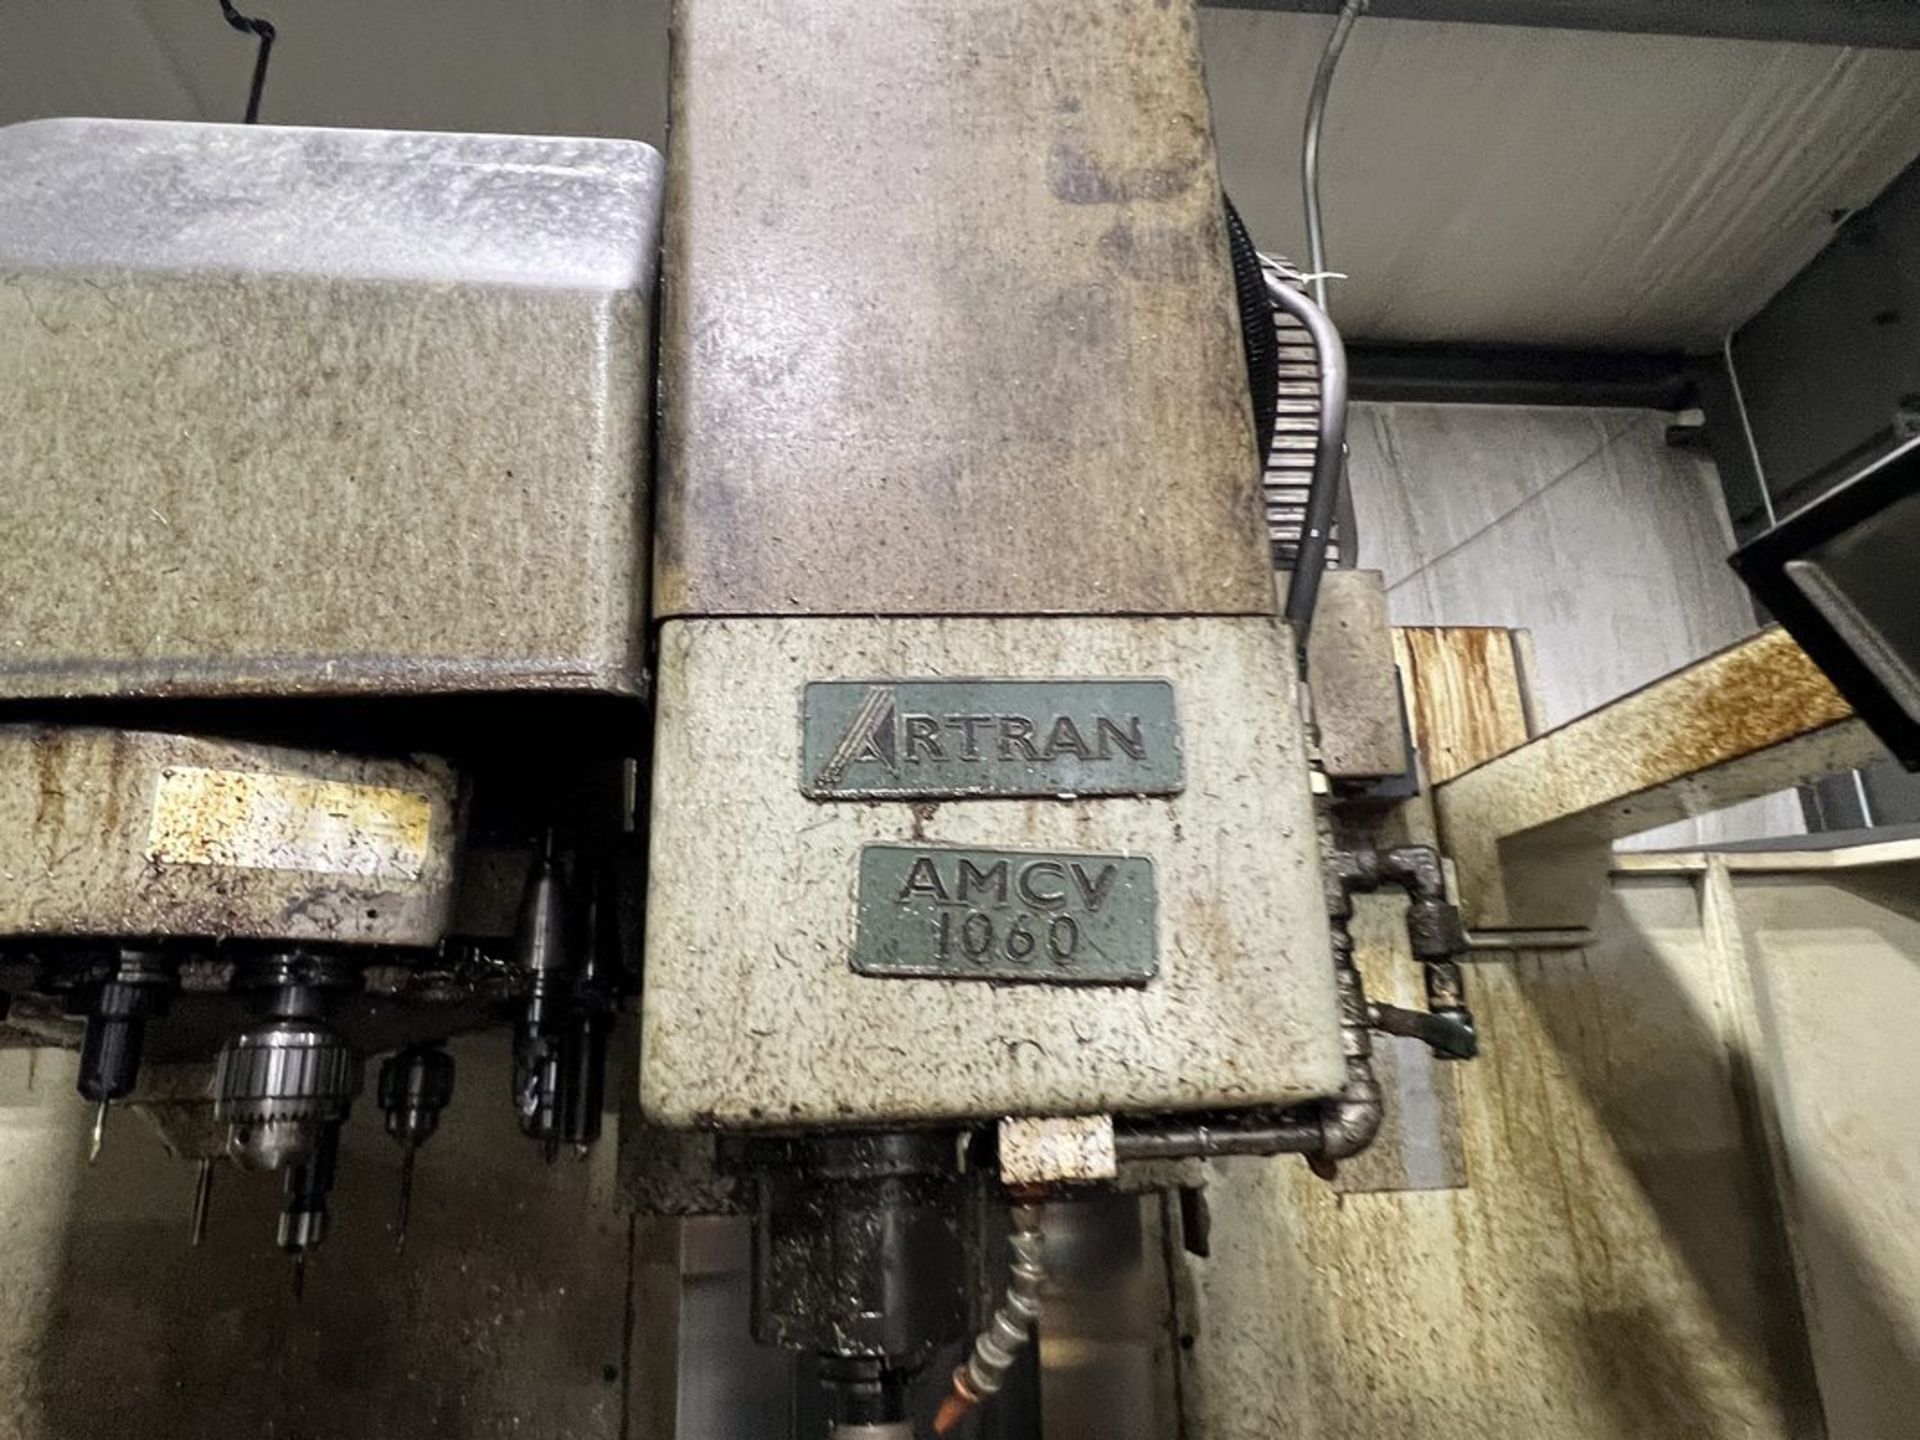 Astran AMCV 1060 CNC Vertical Machining Center, S/N 60900031 - Image 6 of 11